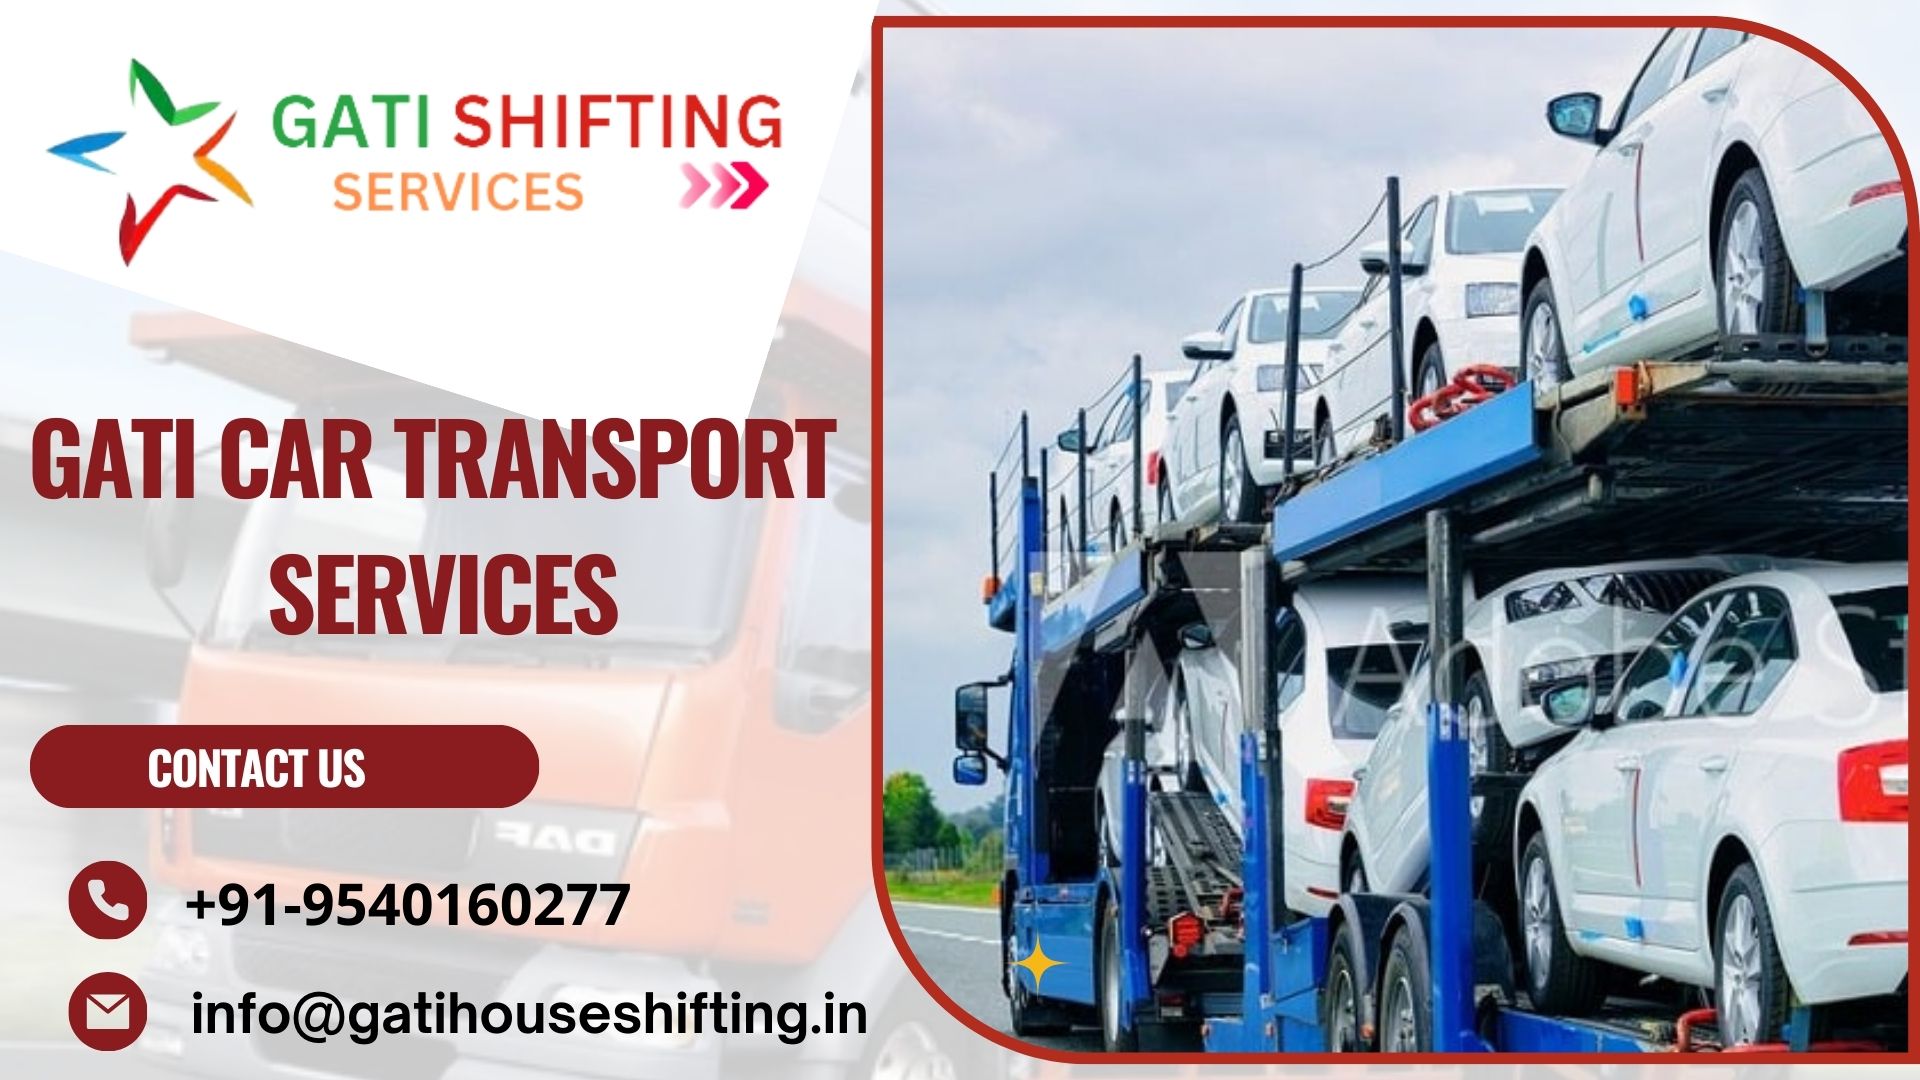 Car transport services in Mumbai